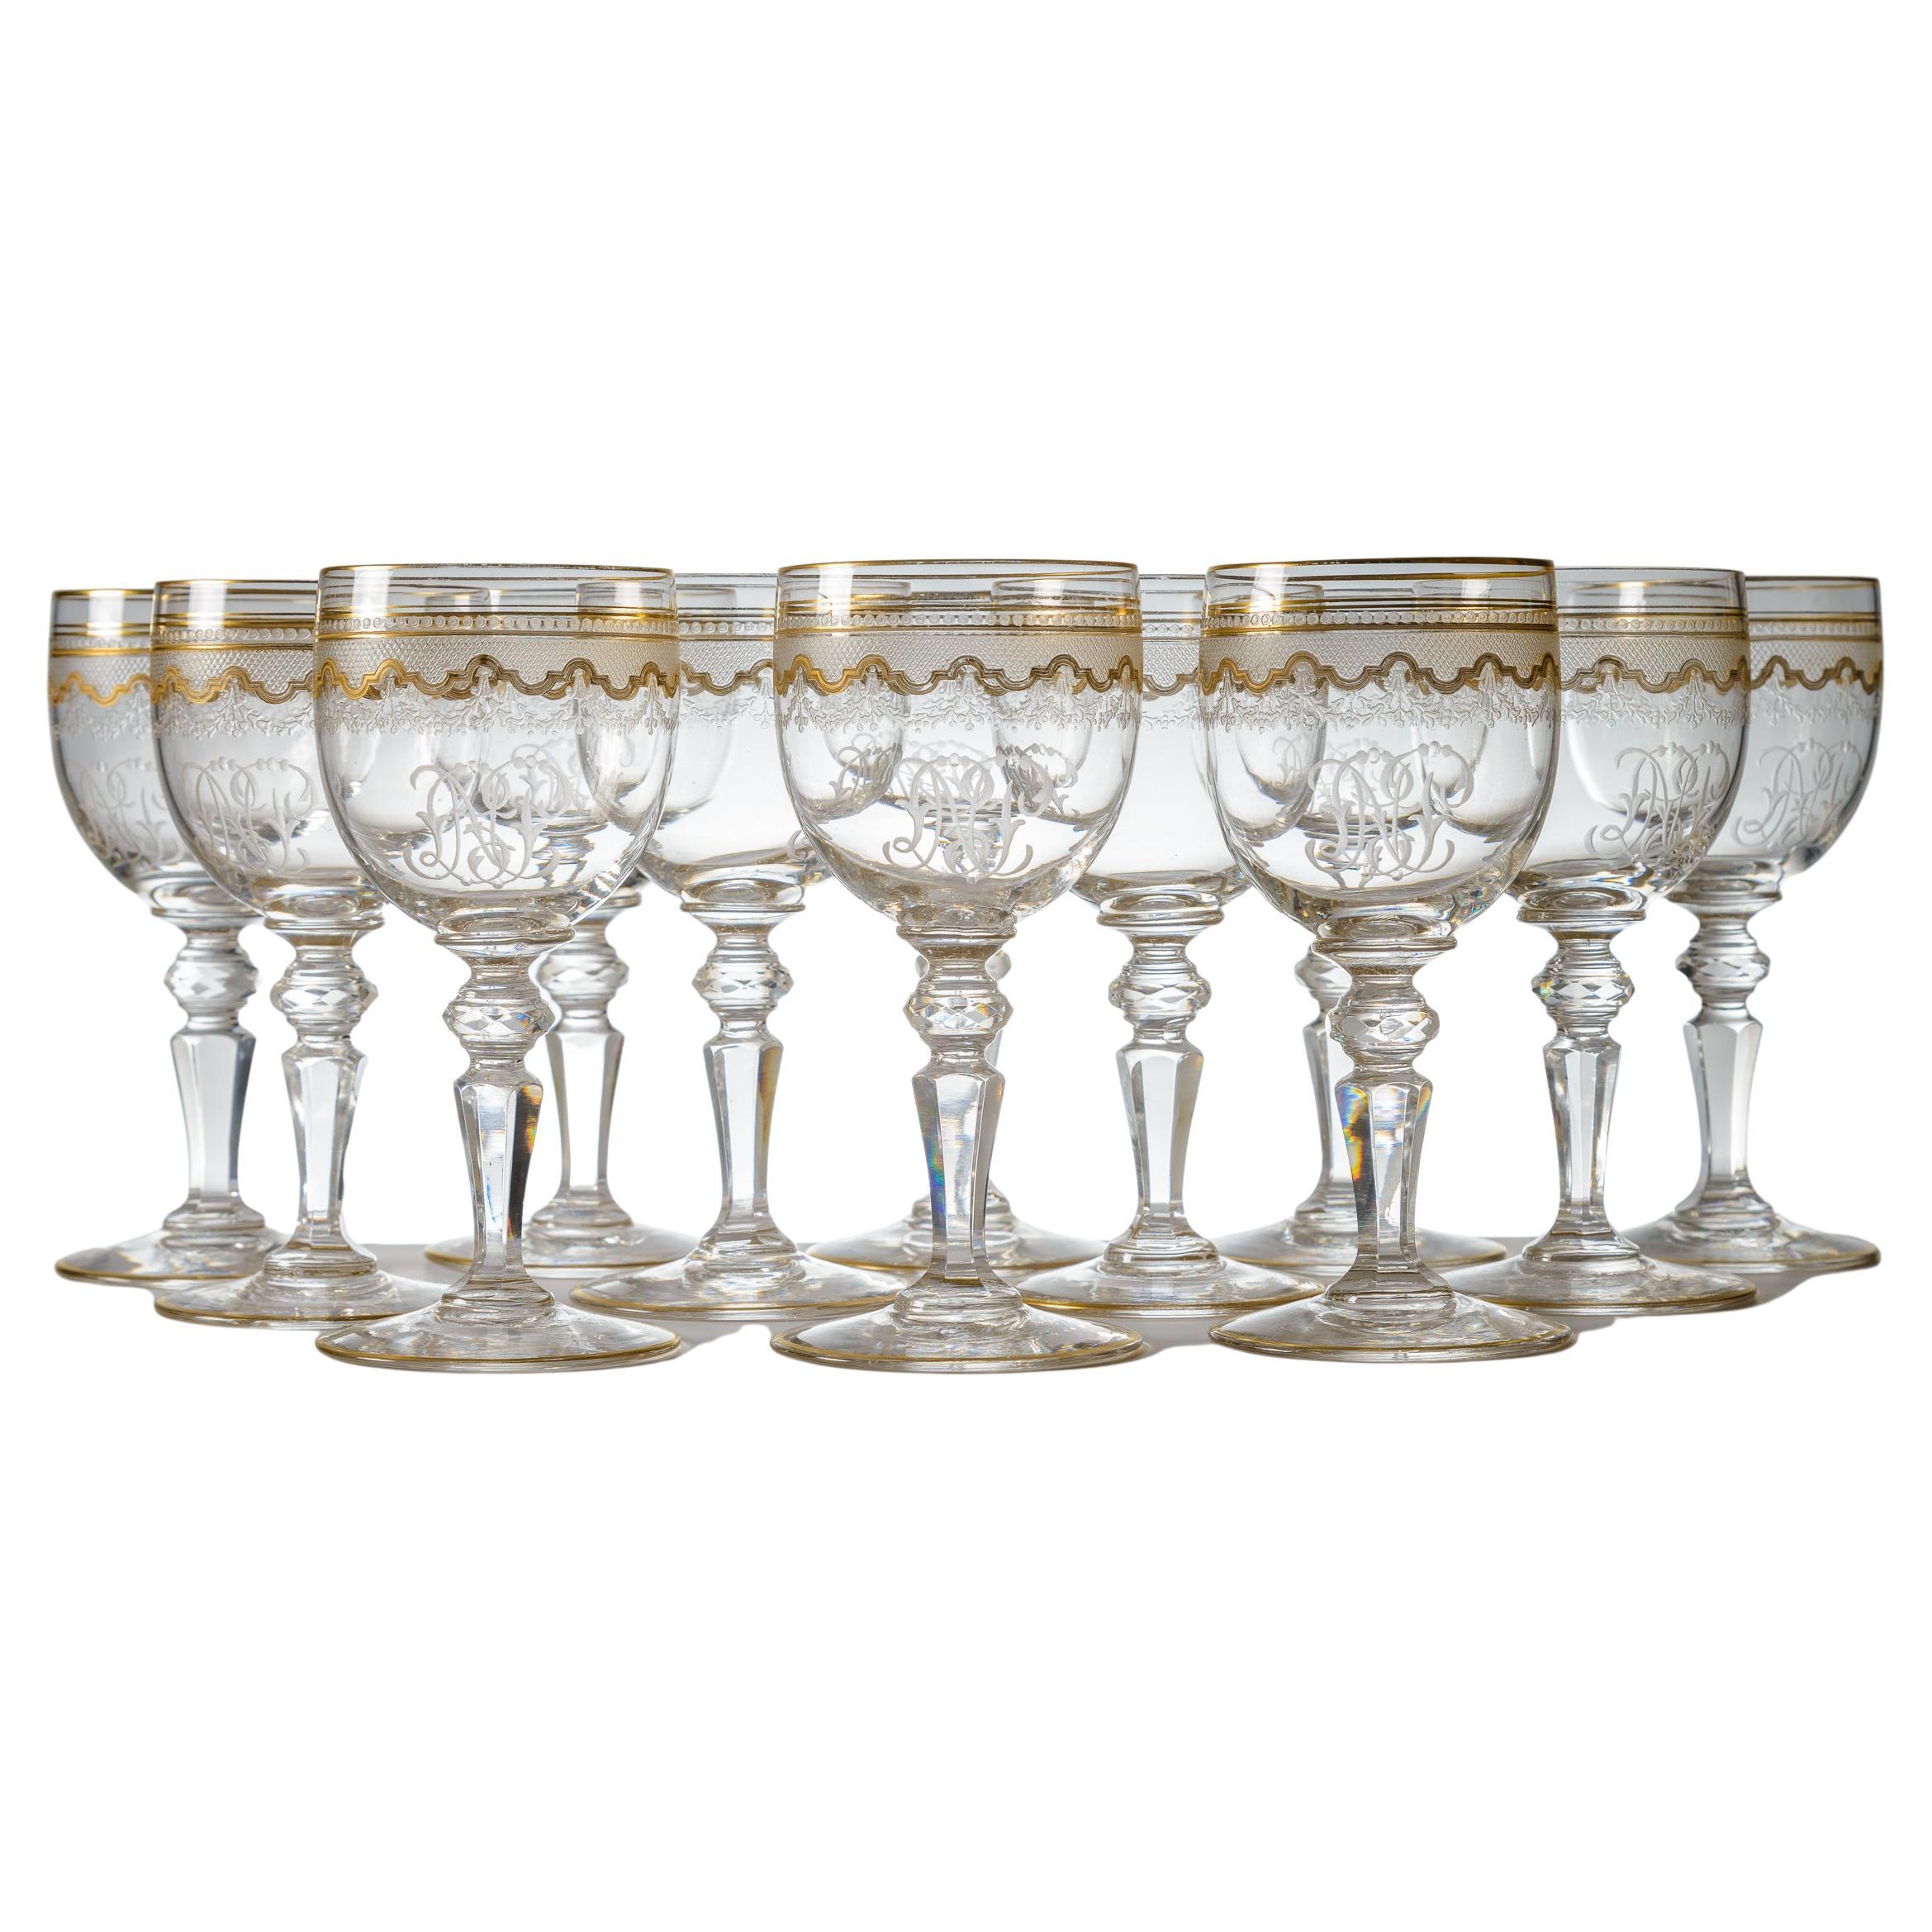 12 Saint Louis Gilt Decorated Wine Glasses With Cut Knob Stems, Antique For Sale